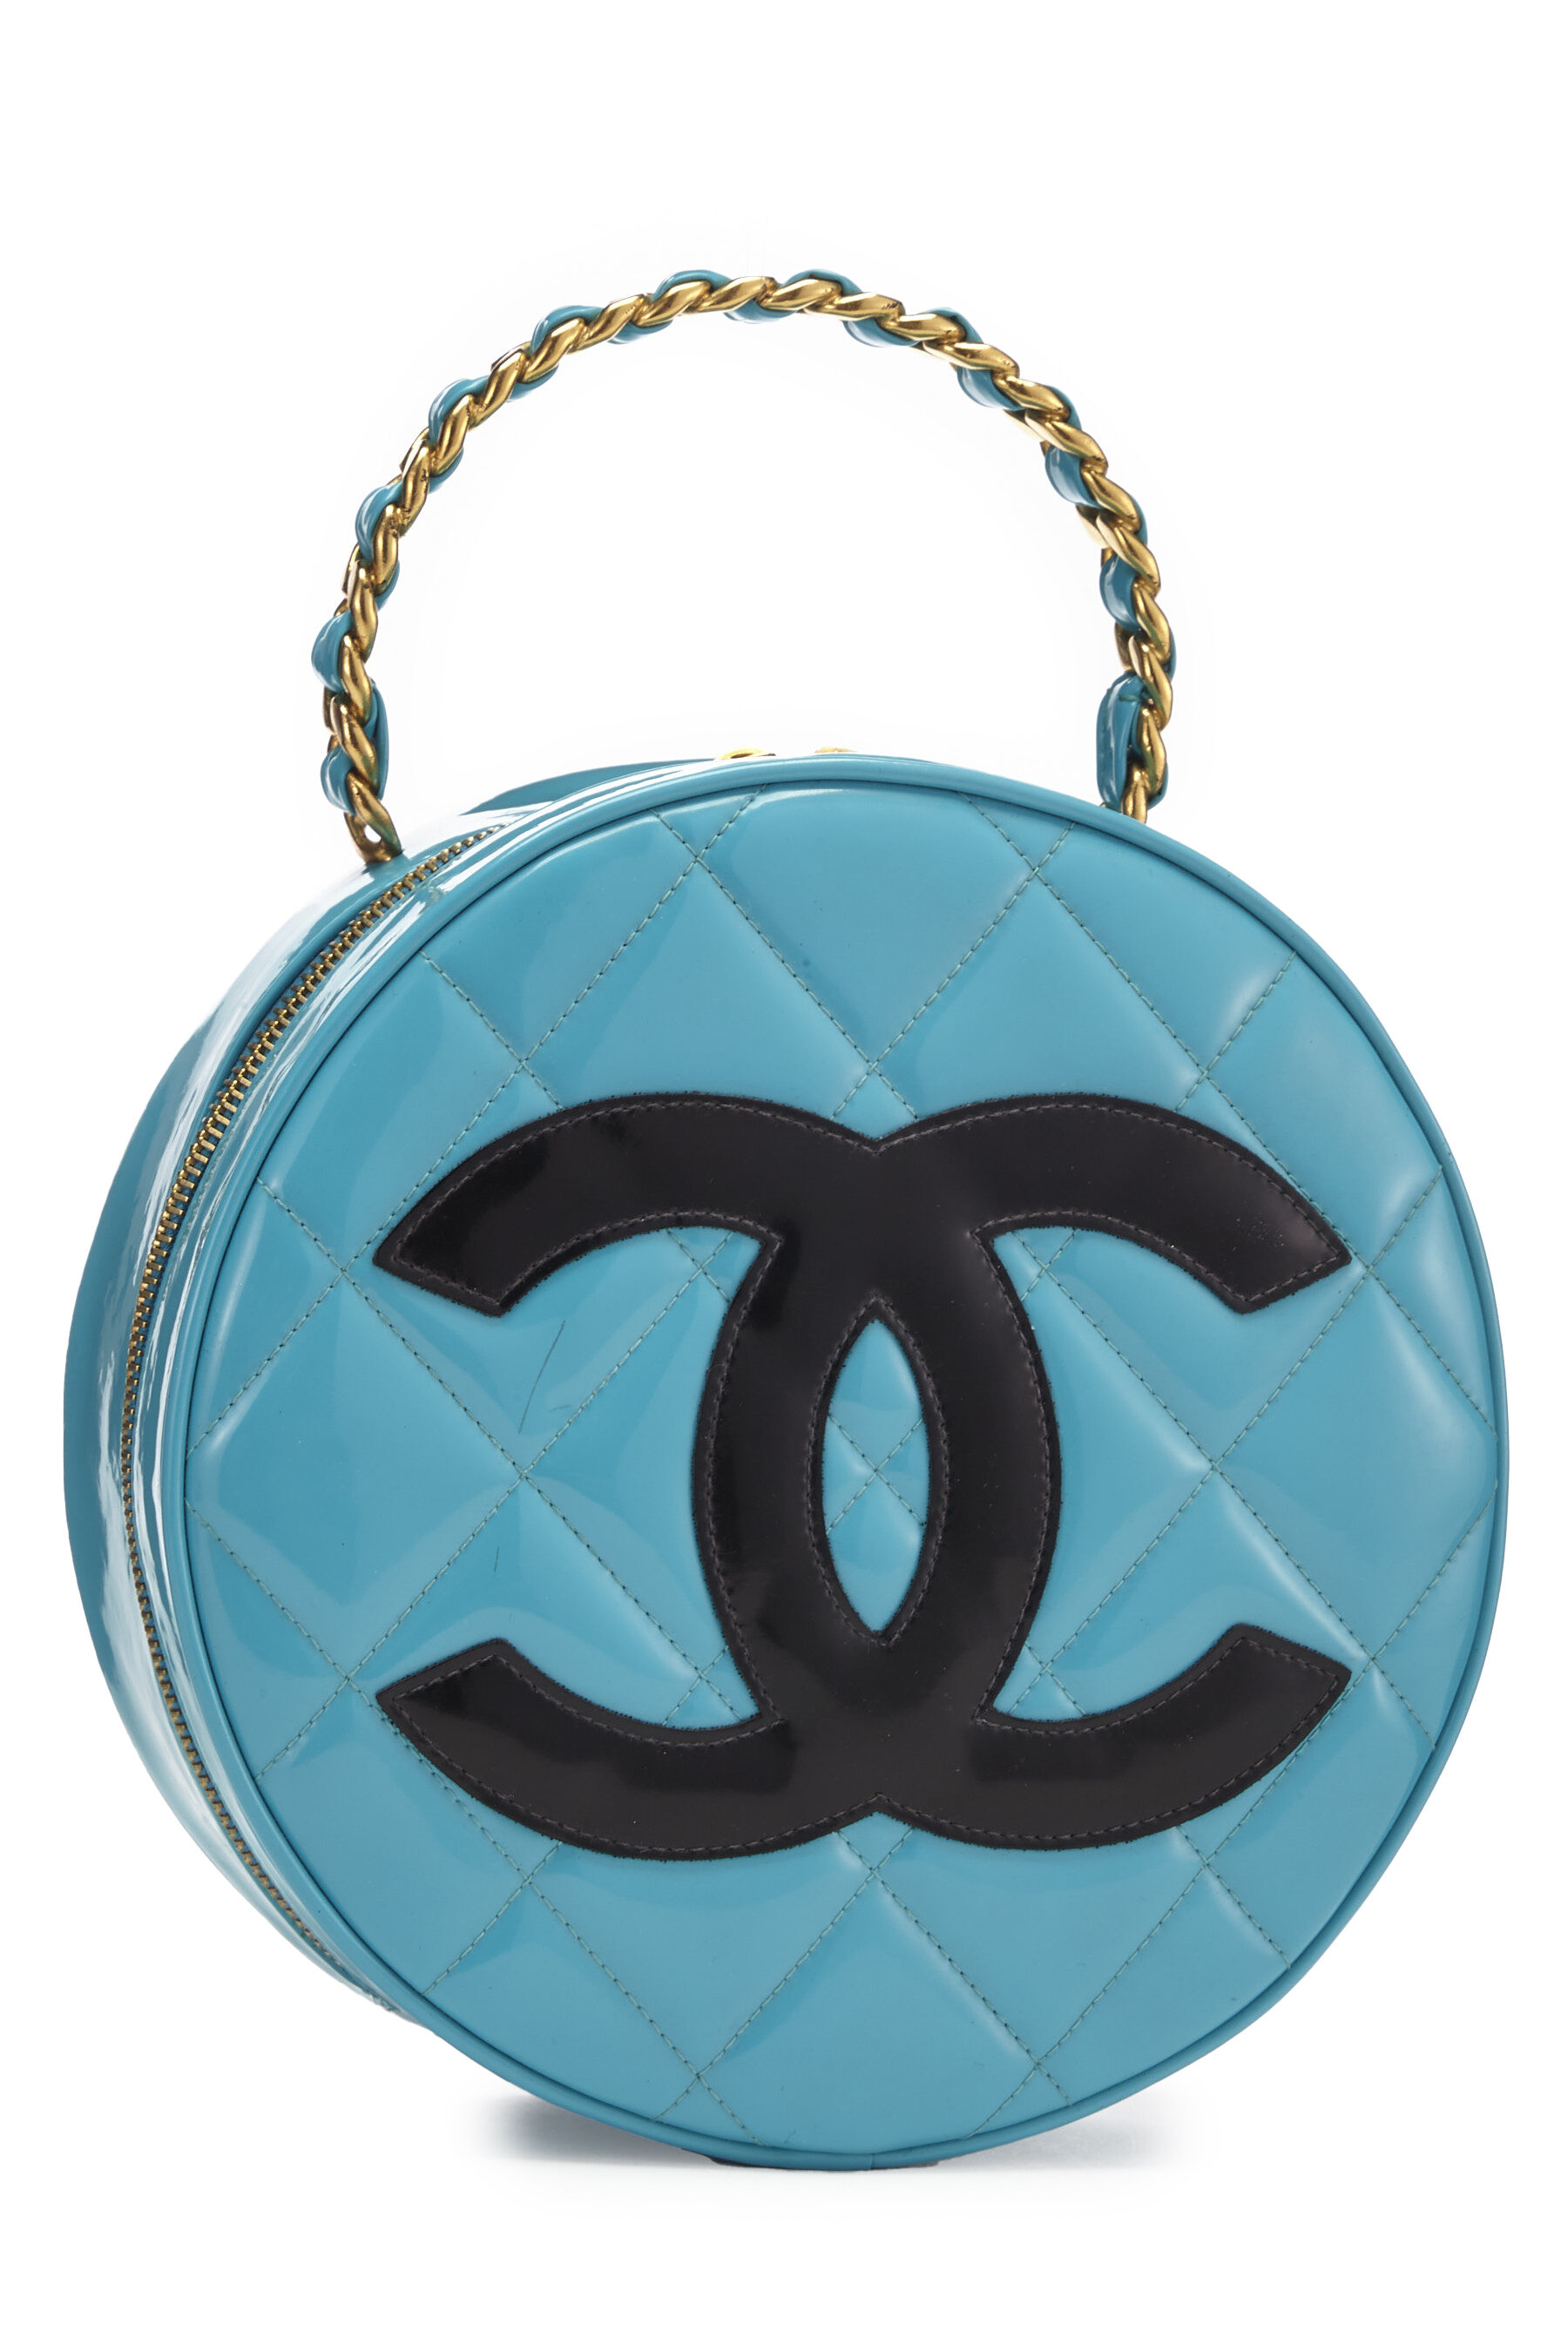 Chanel Round CC Bag